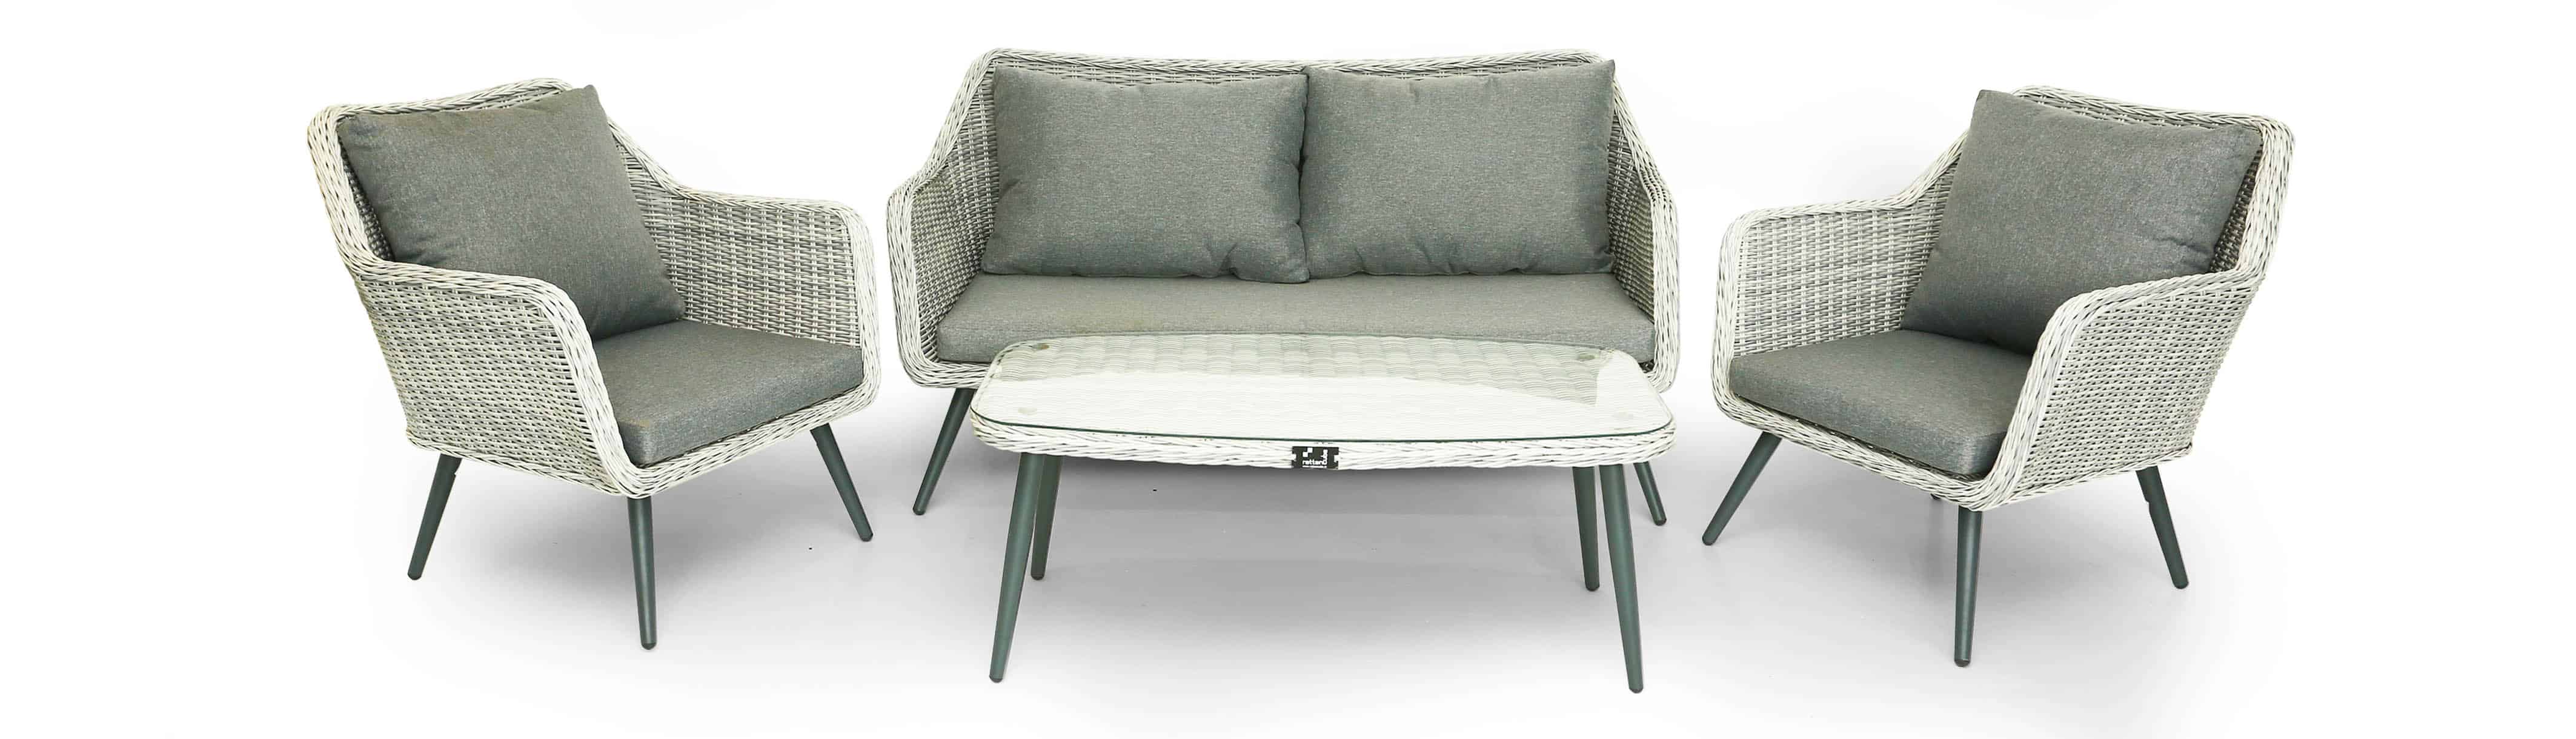 Malaga Rattan Furniture Range | Outdoor Sofa Set